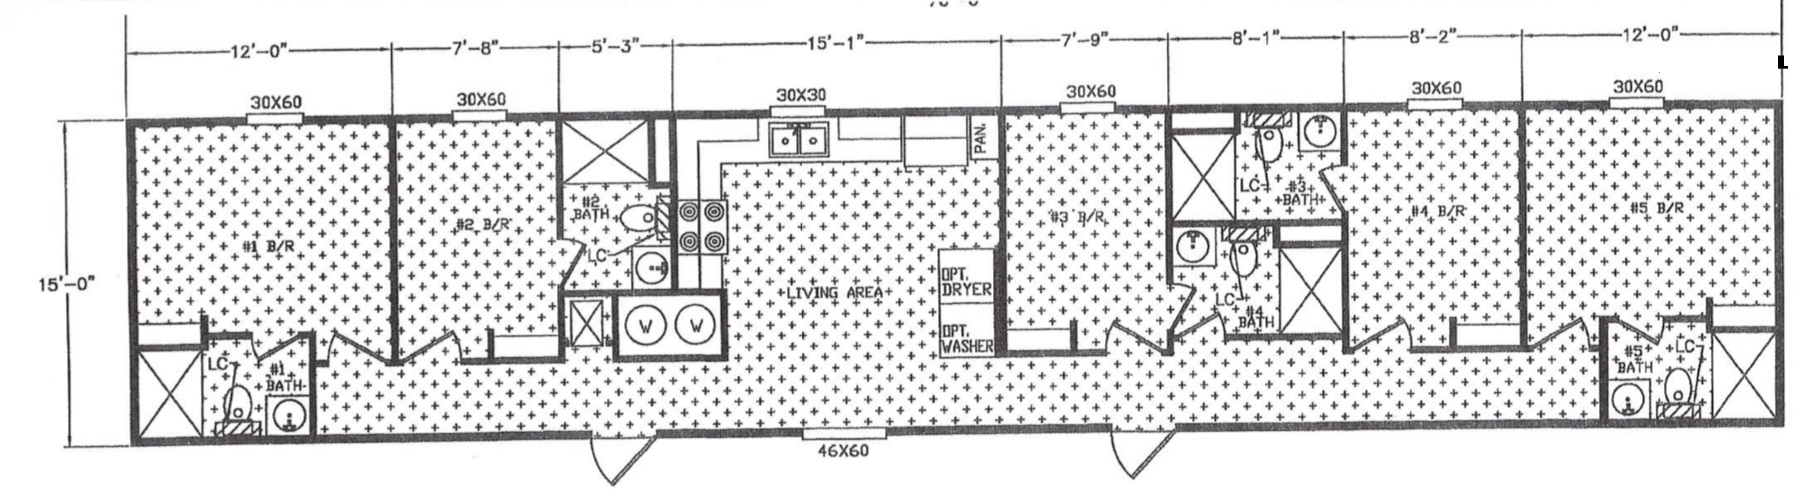 workforce housing floor plan 5 bedroom 5 bath